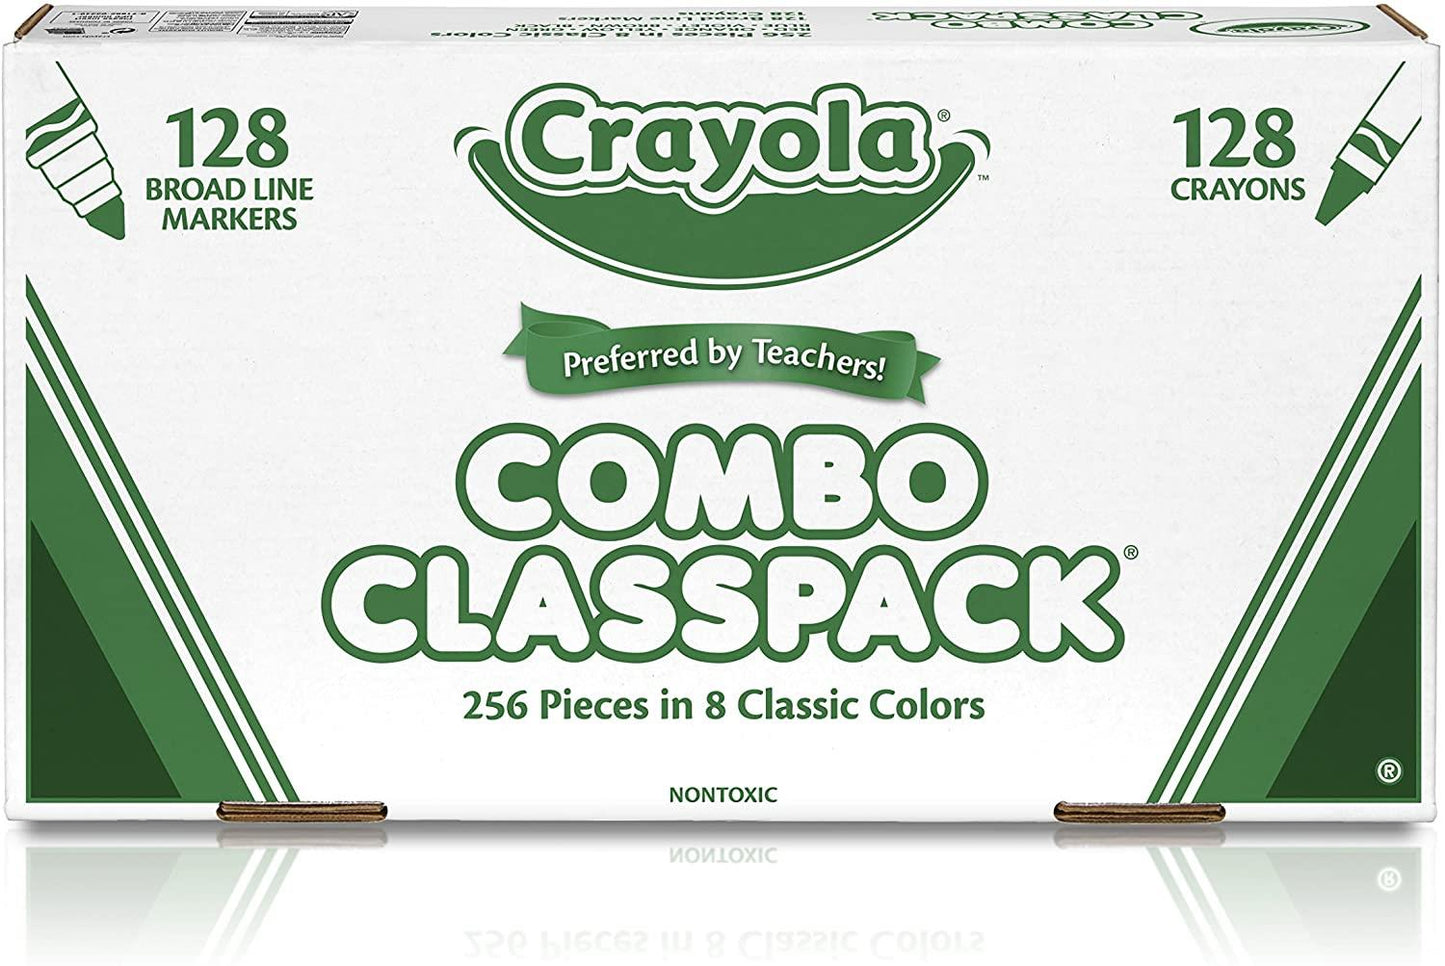 CRAYOLA CRAYOLA Combo Classpack Crayons & Markers 256